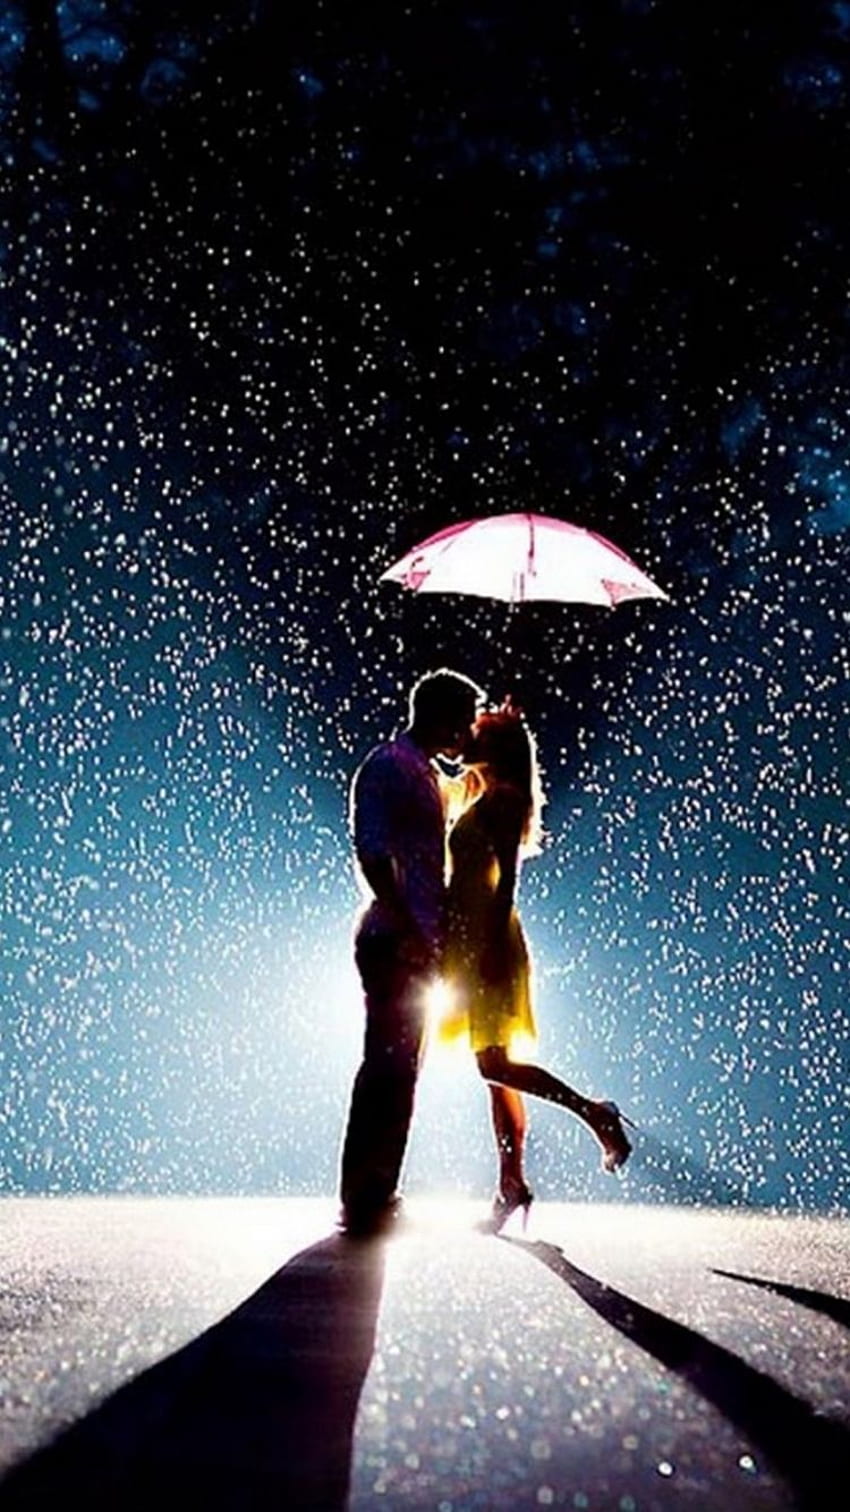 Pasangan Cinta Romantis di Hujan iPhone 2019, Lucu 3D wallpaper ponsel HD